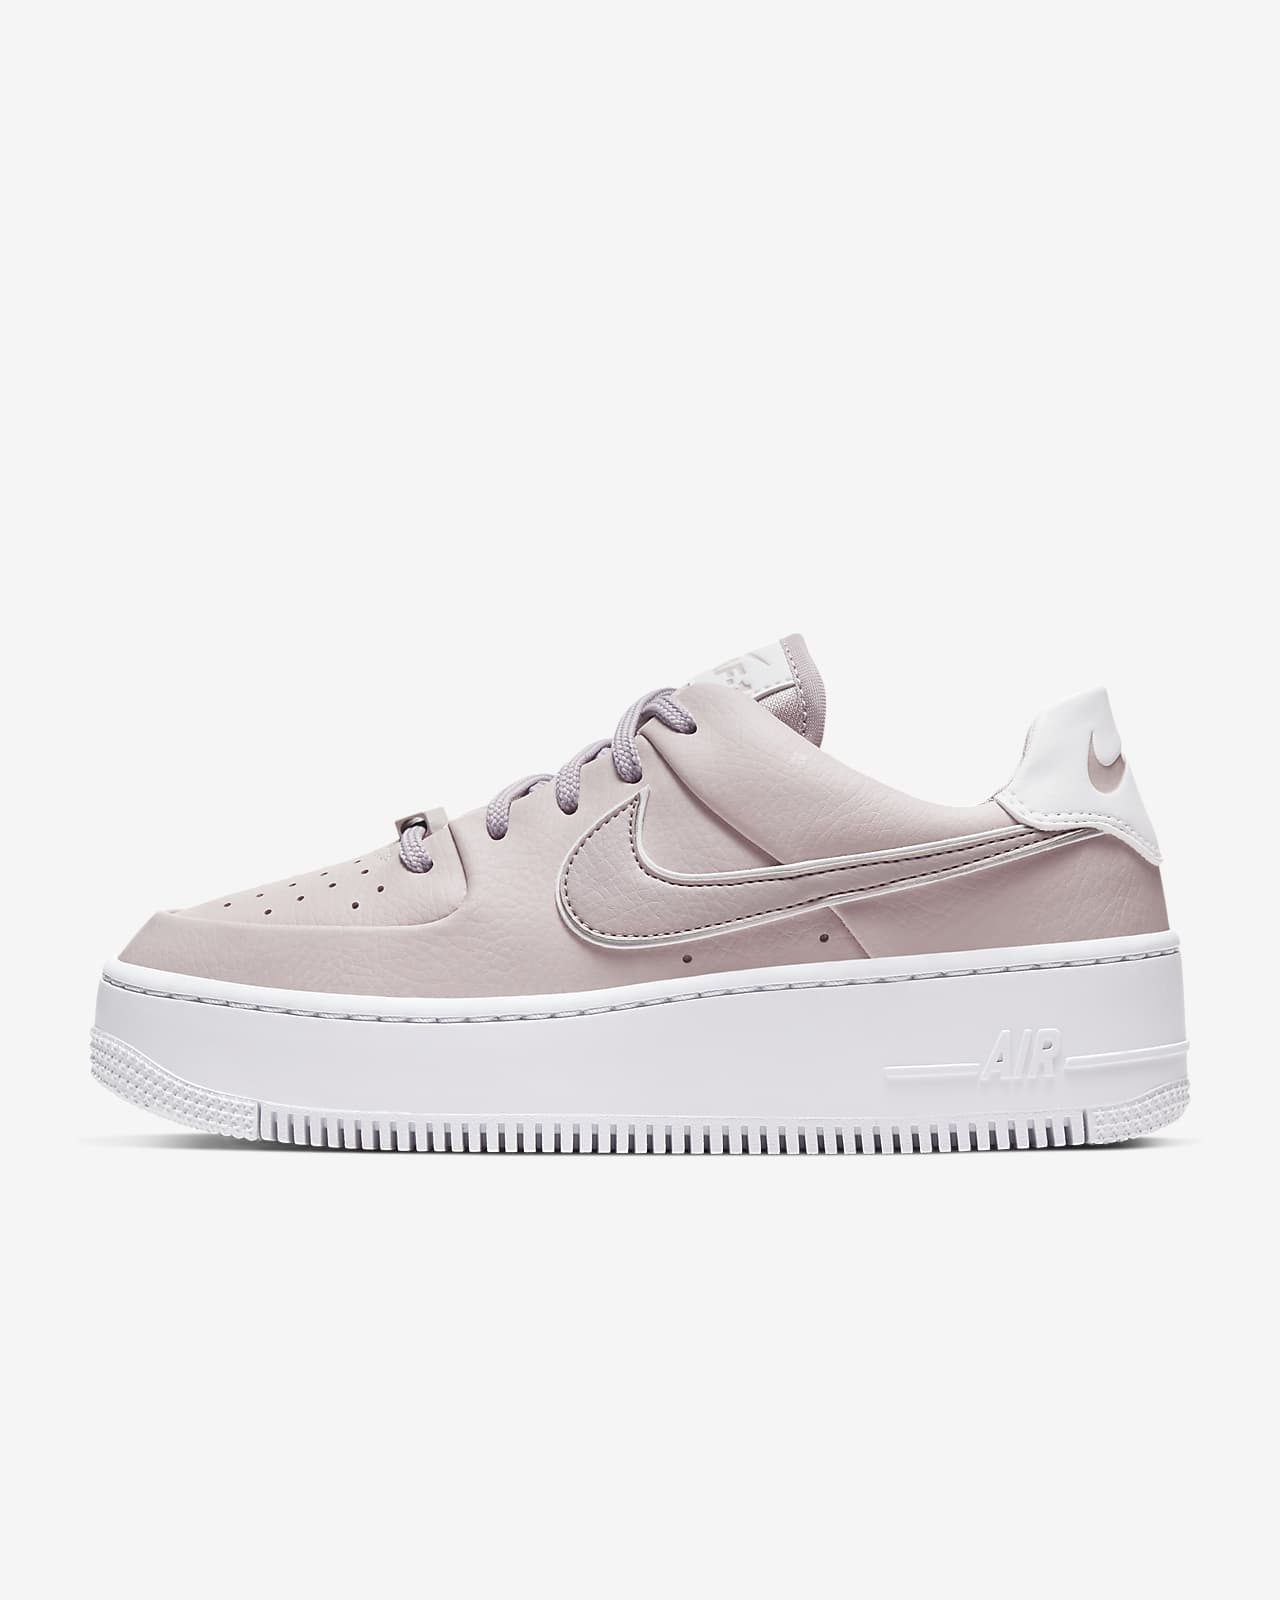 Nike Air Force 1 Sage Low Women's Shoe 